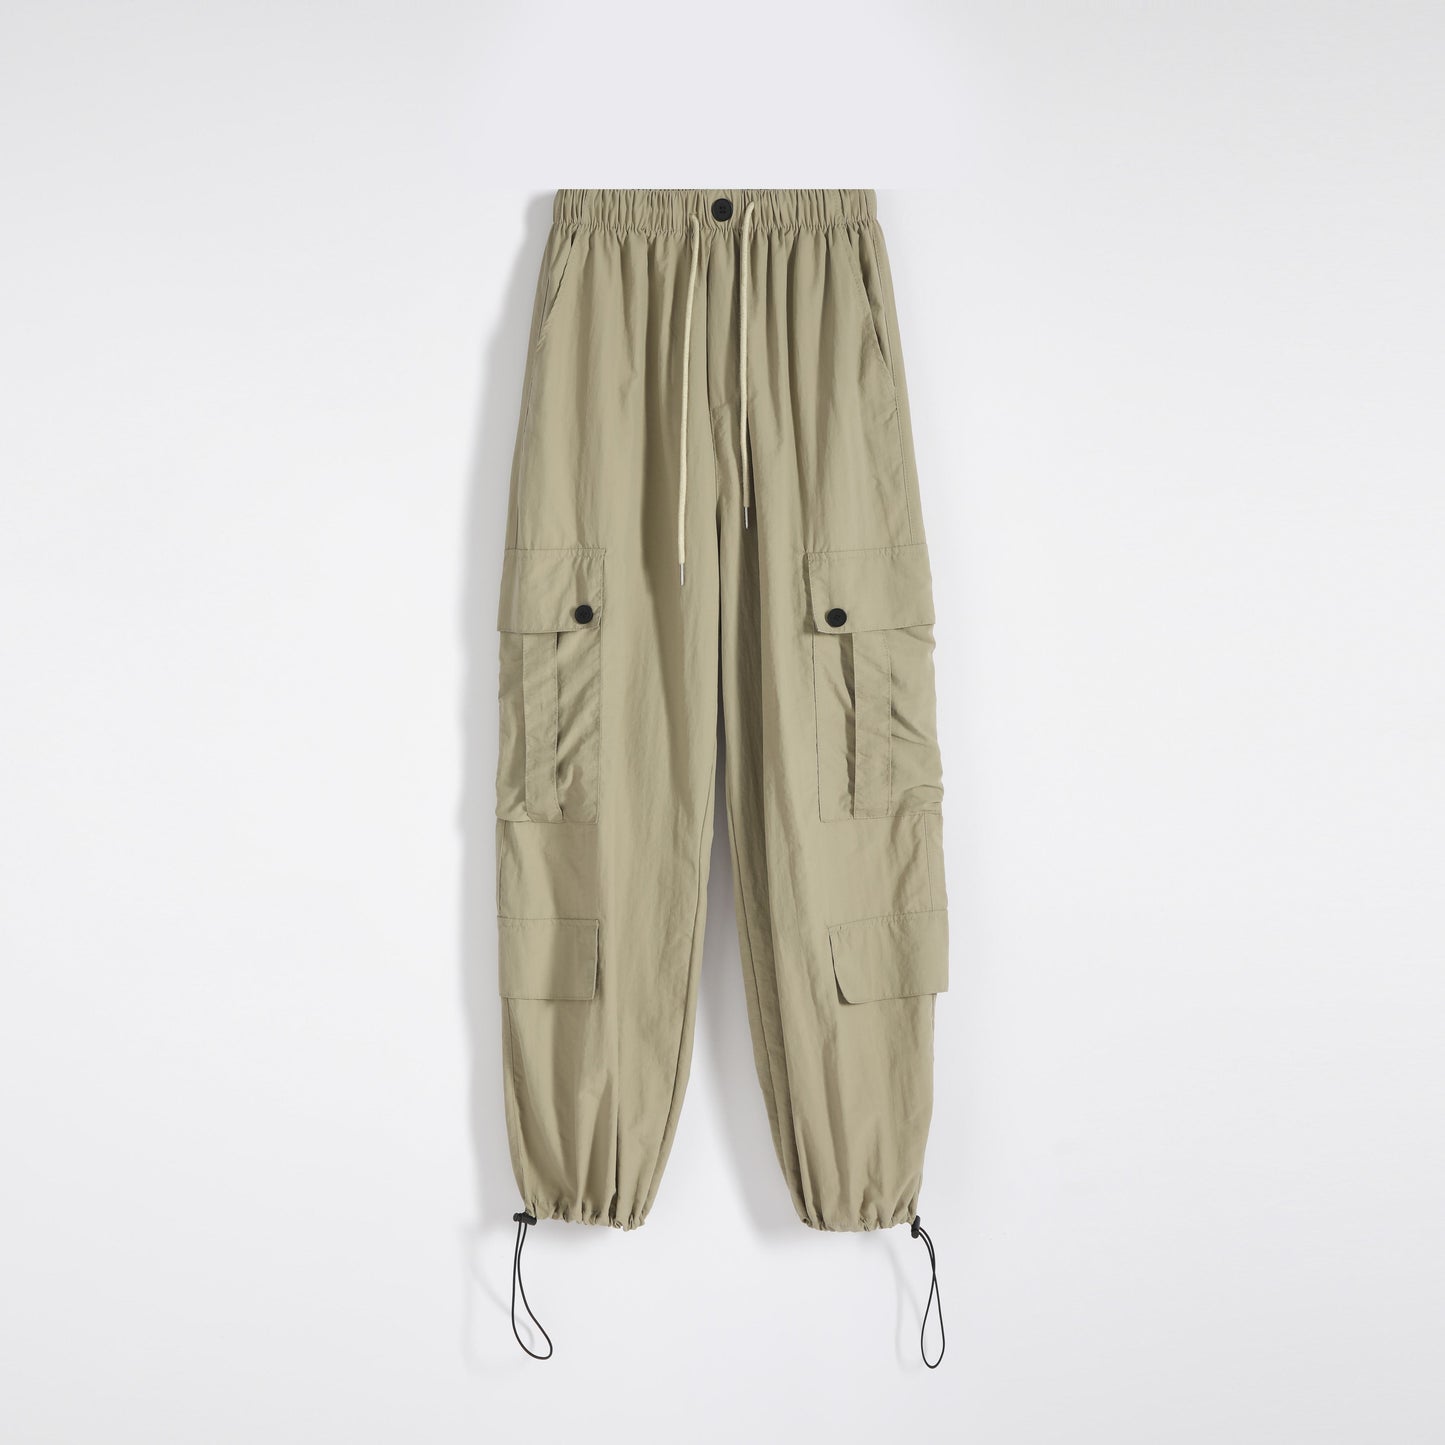 Pantalones holgados casuales clásicos de múltiples bolsillos de moda